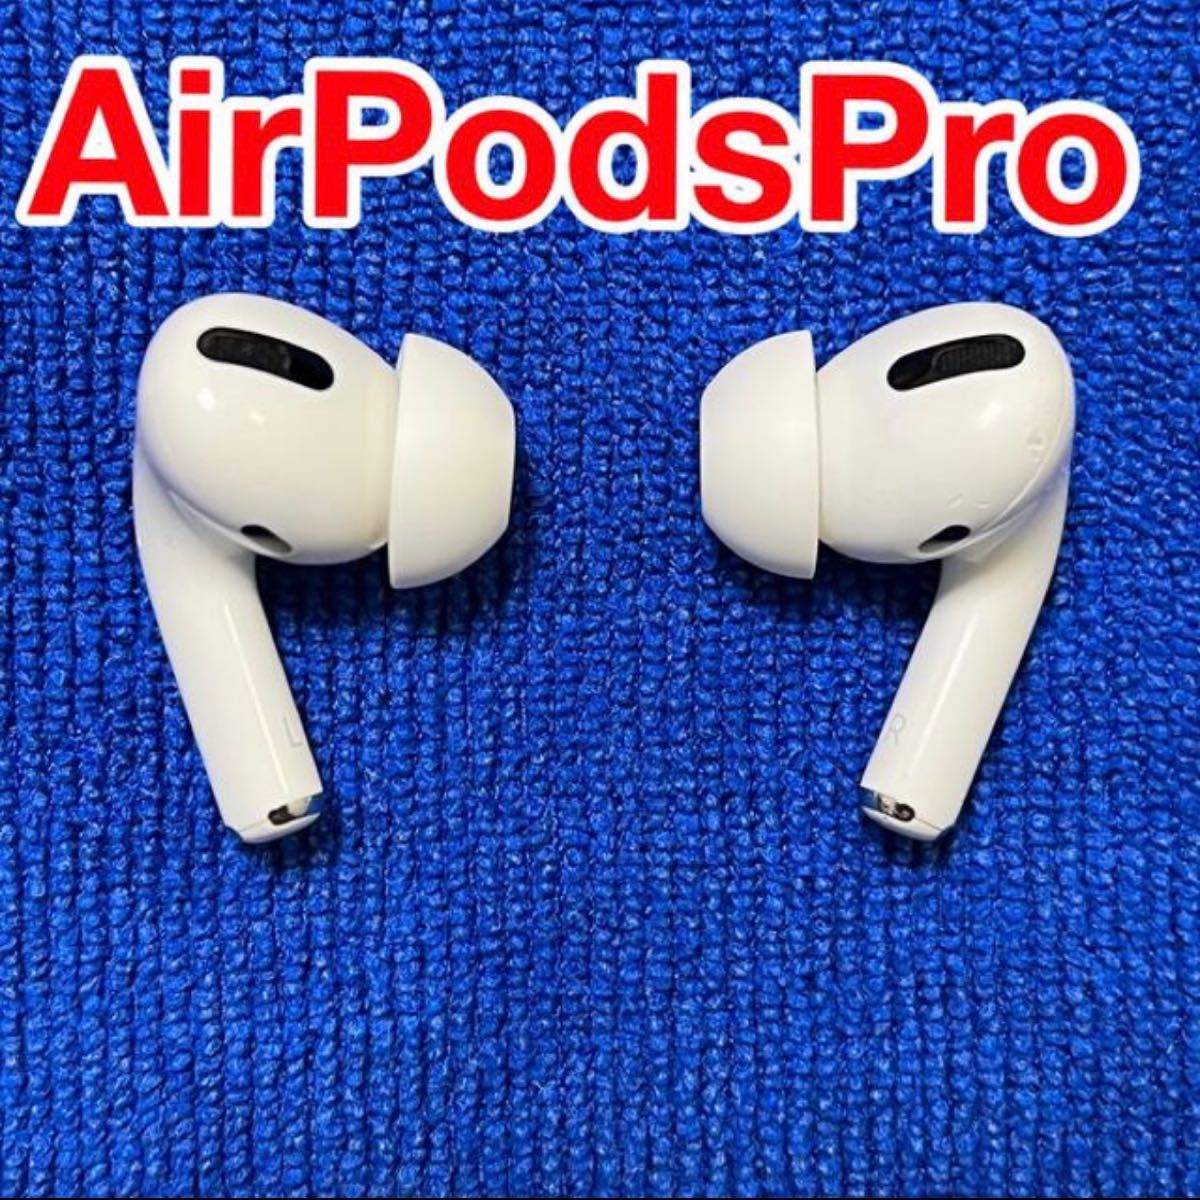 Apple AirPods Pro 両耳 正規品 エアポッツプロ 本体 アップル 